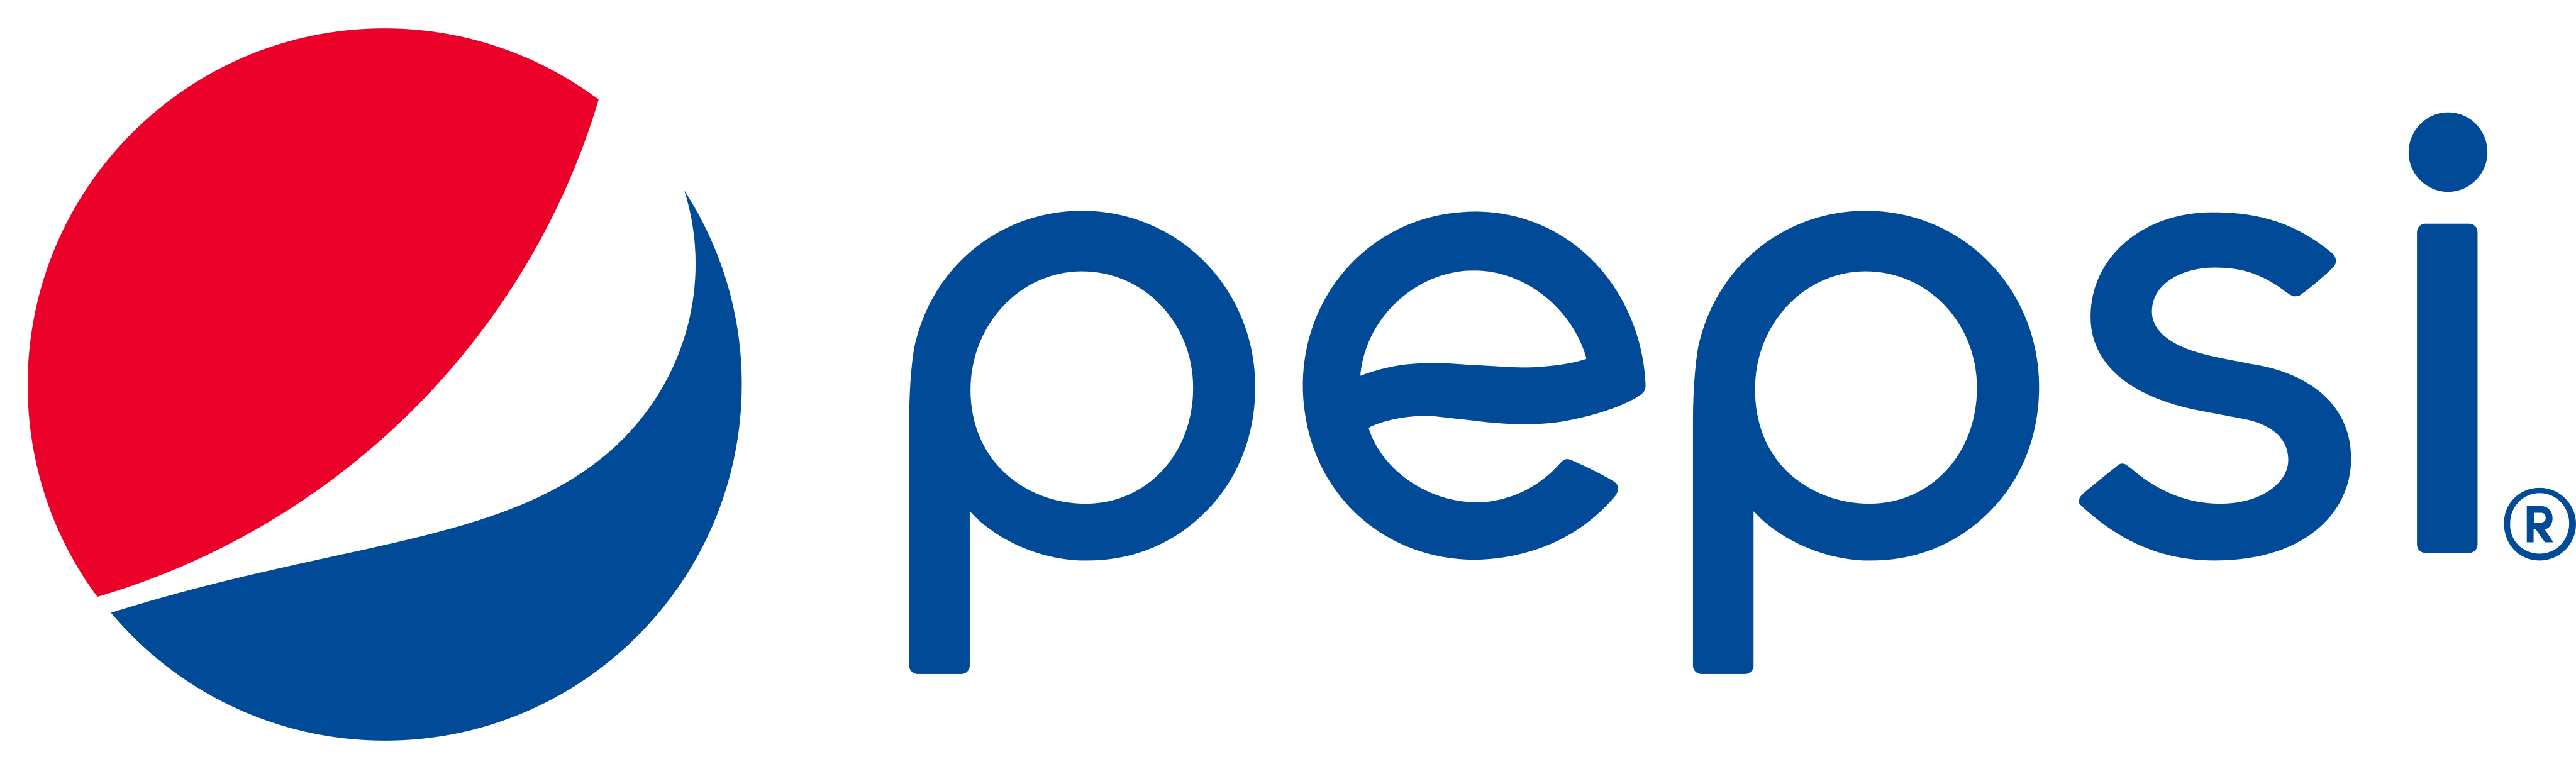 pepsi logo 1 - Pepsi Logo